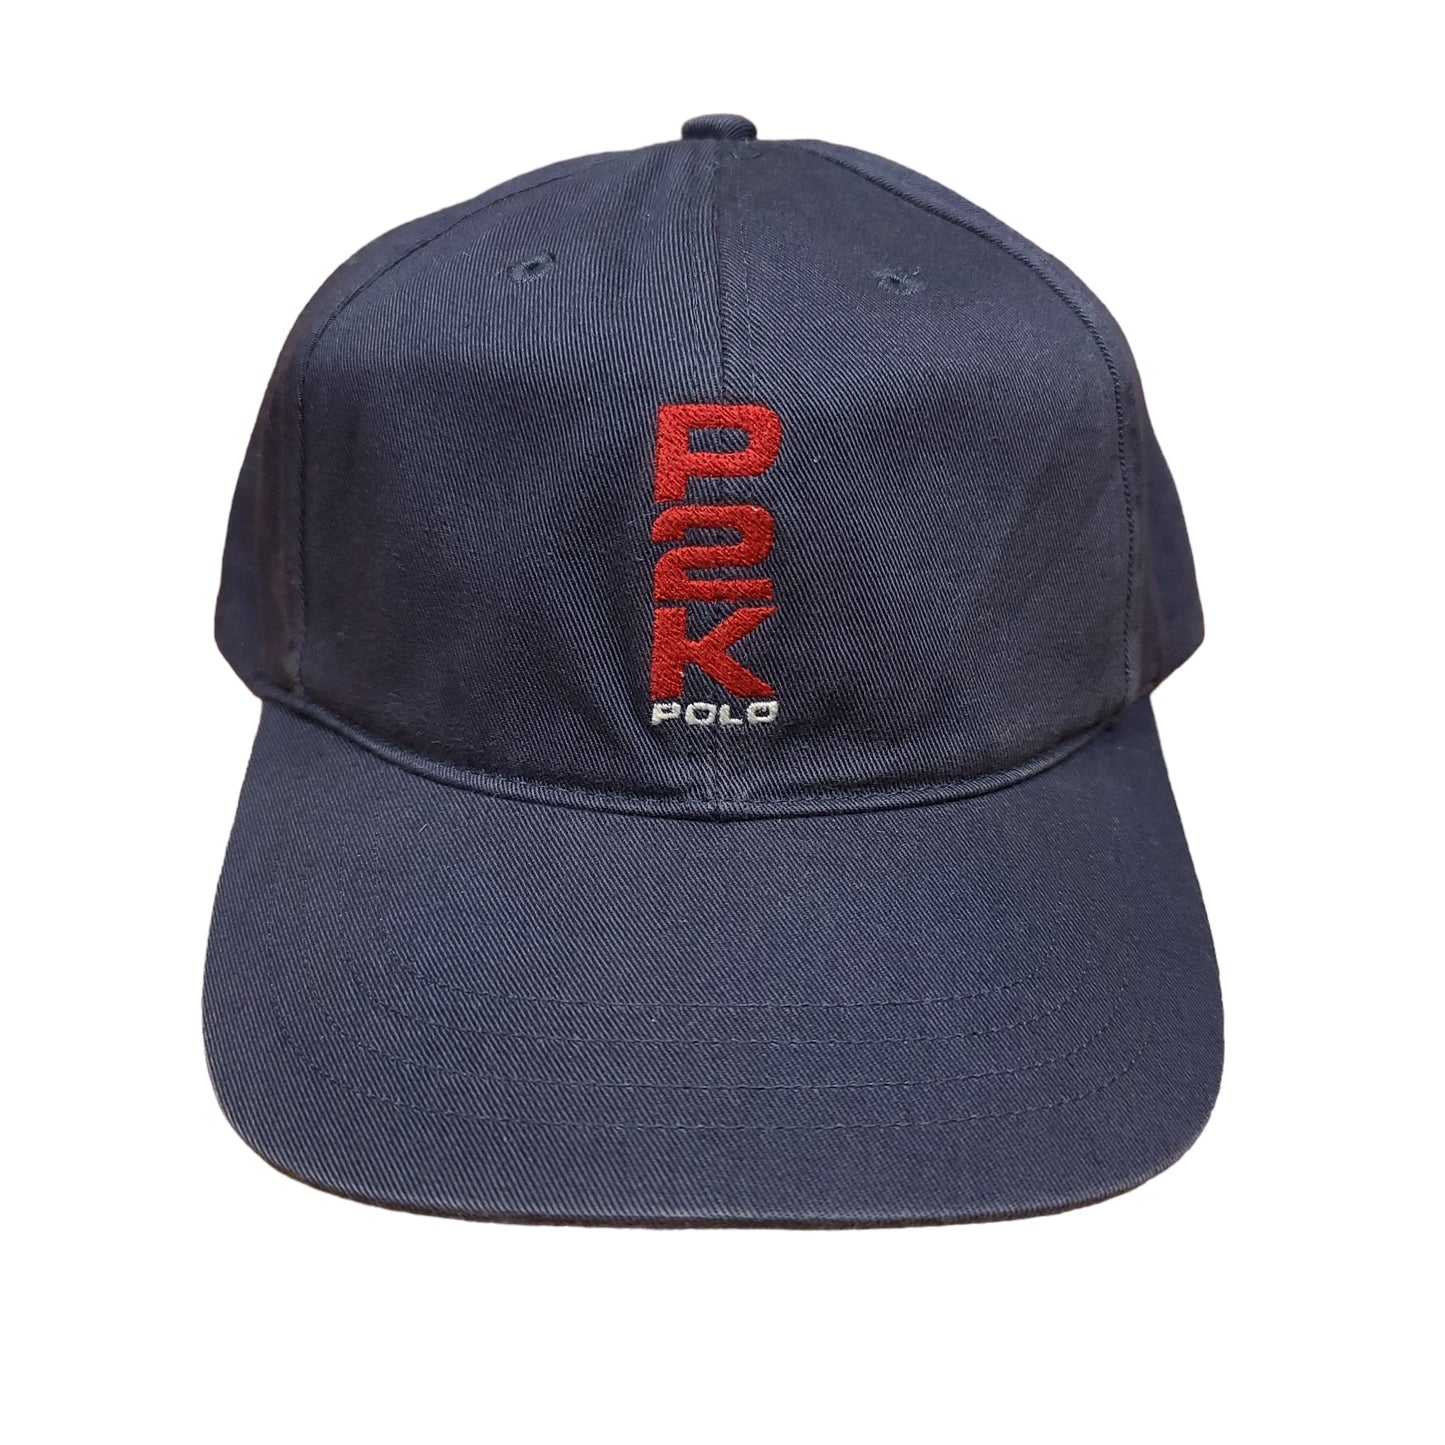 Vintage Polo Ralph Lauren P2K Navy Blue Strap Back Hat